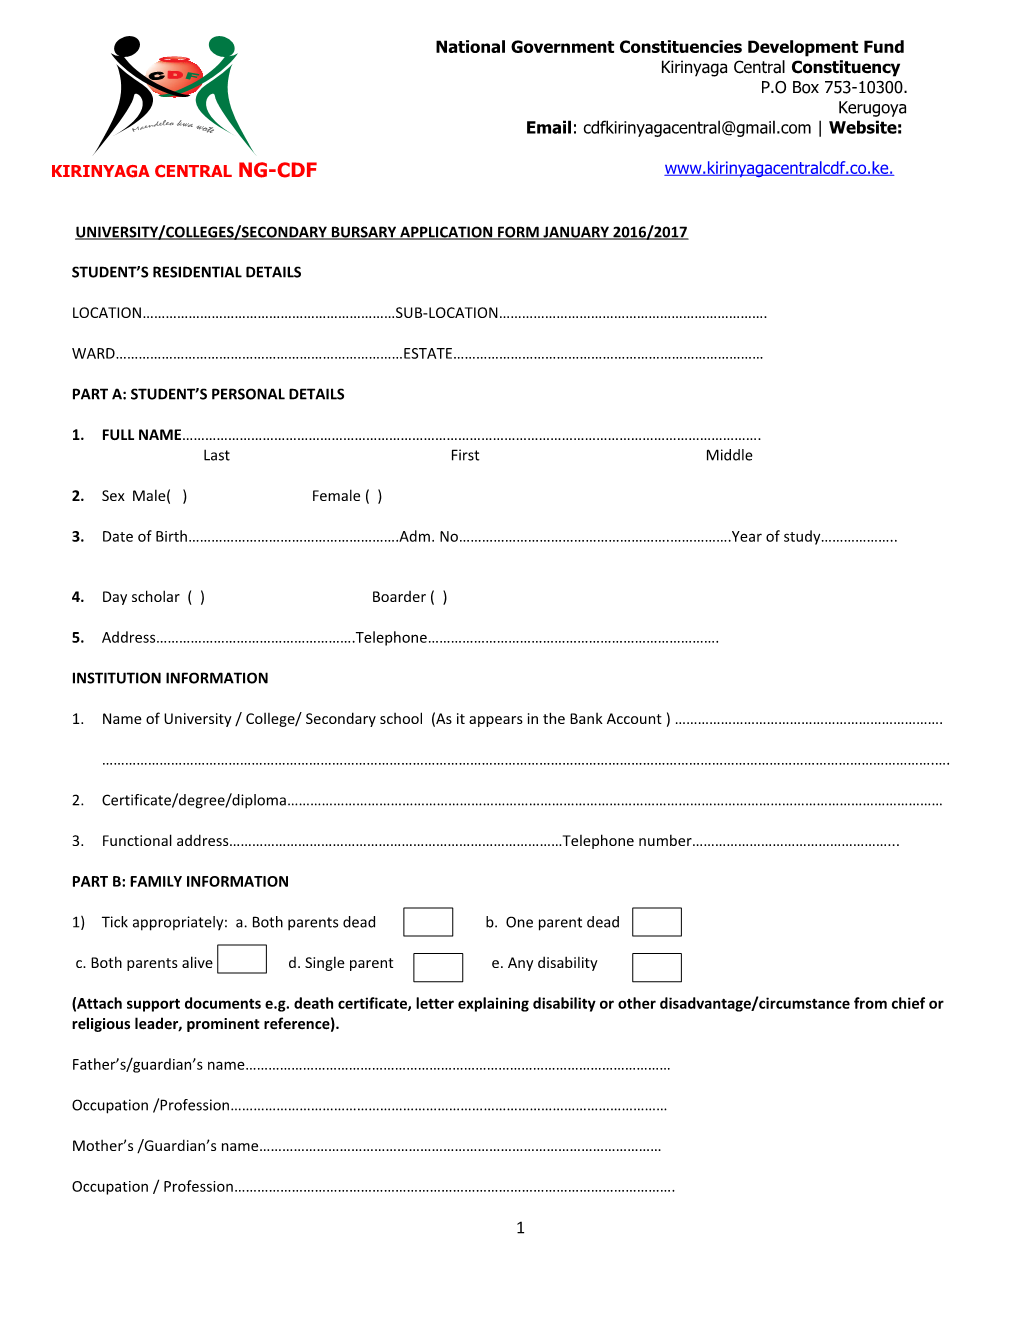 University/Colleges/Secondary Bursary Application Form January 2016/2017